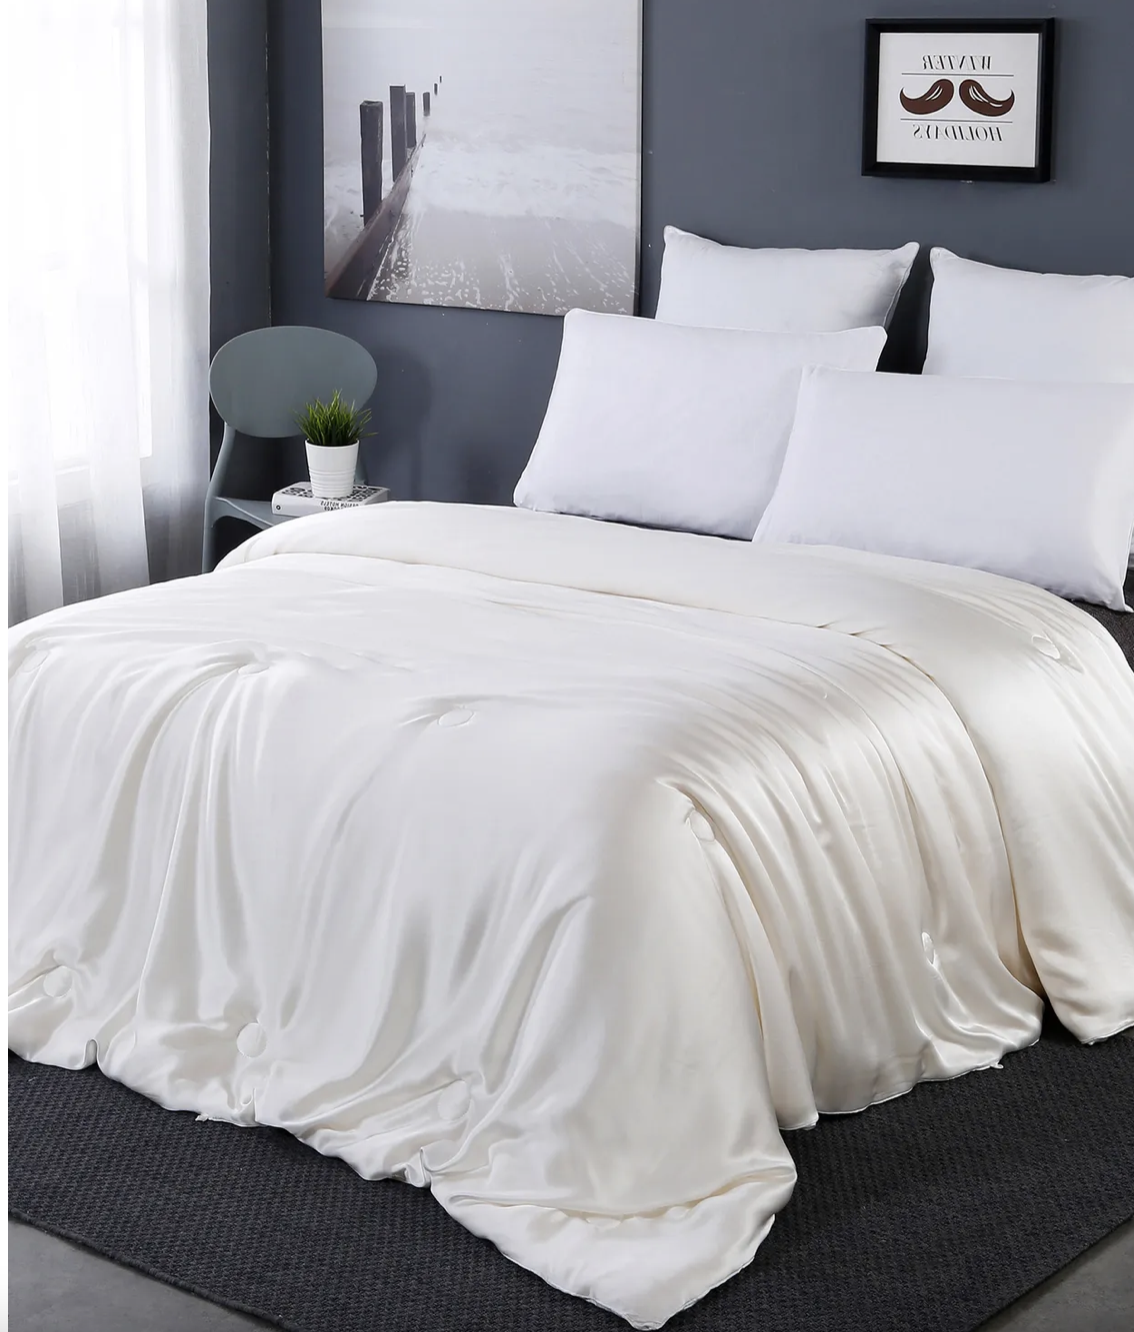 Lilysilk: up to 30% off silk pillow & comforter